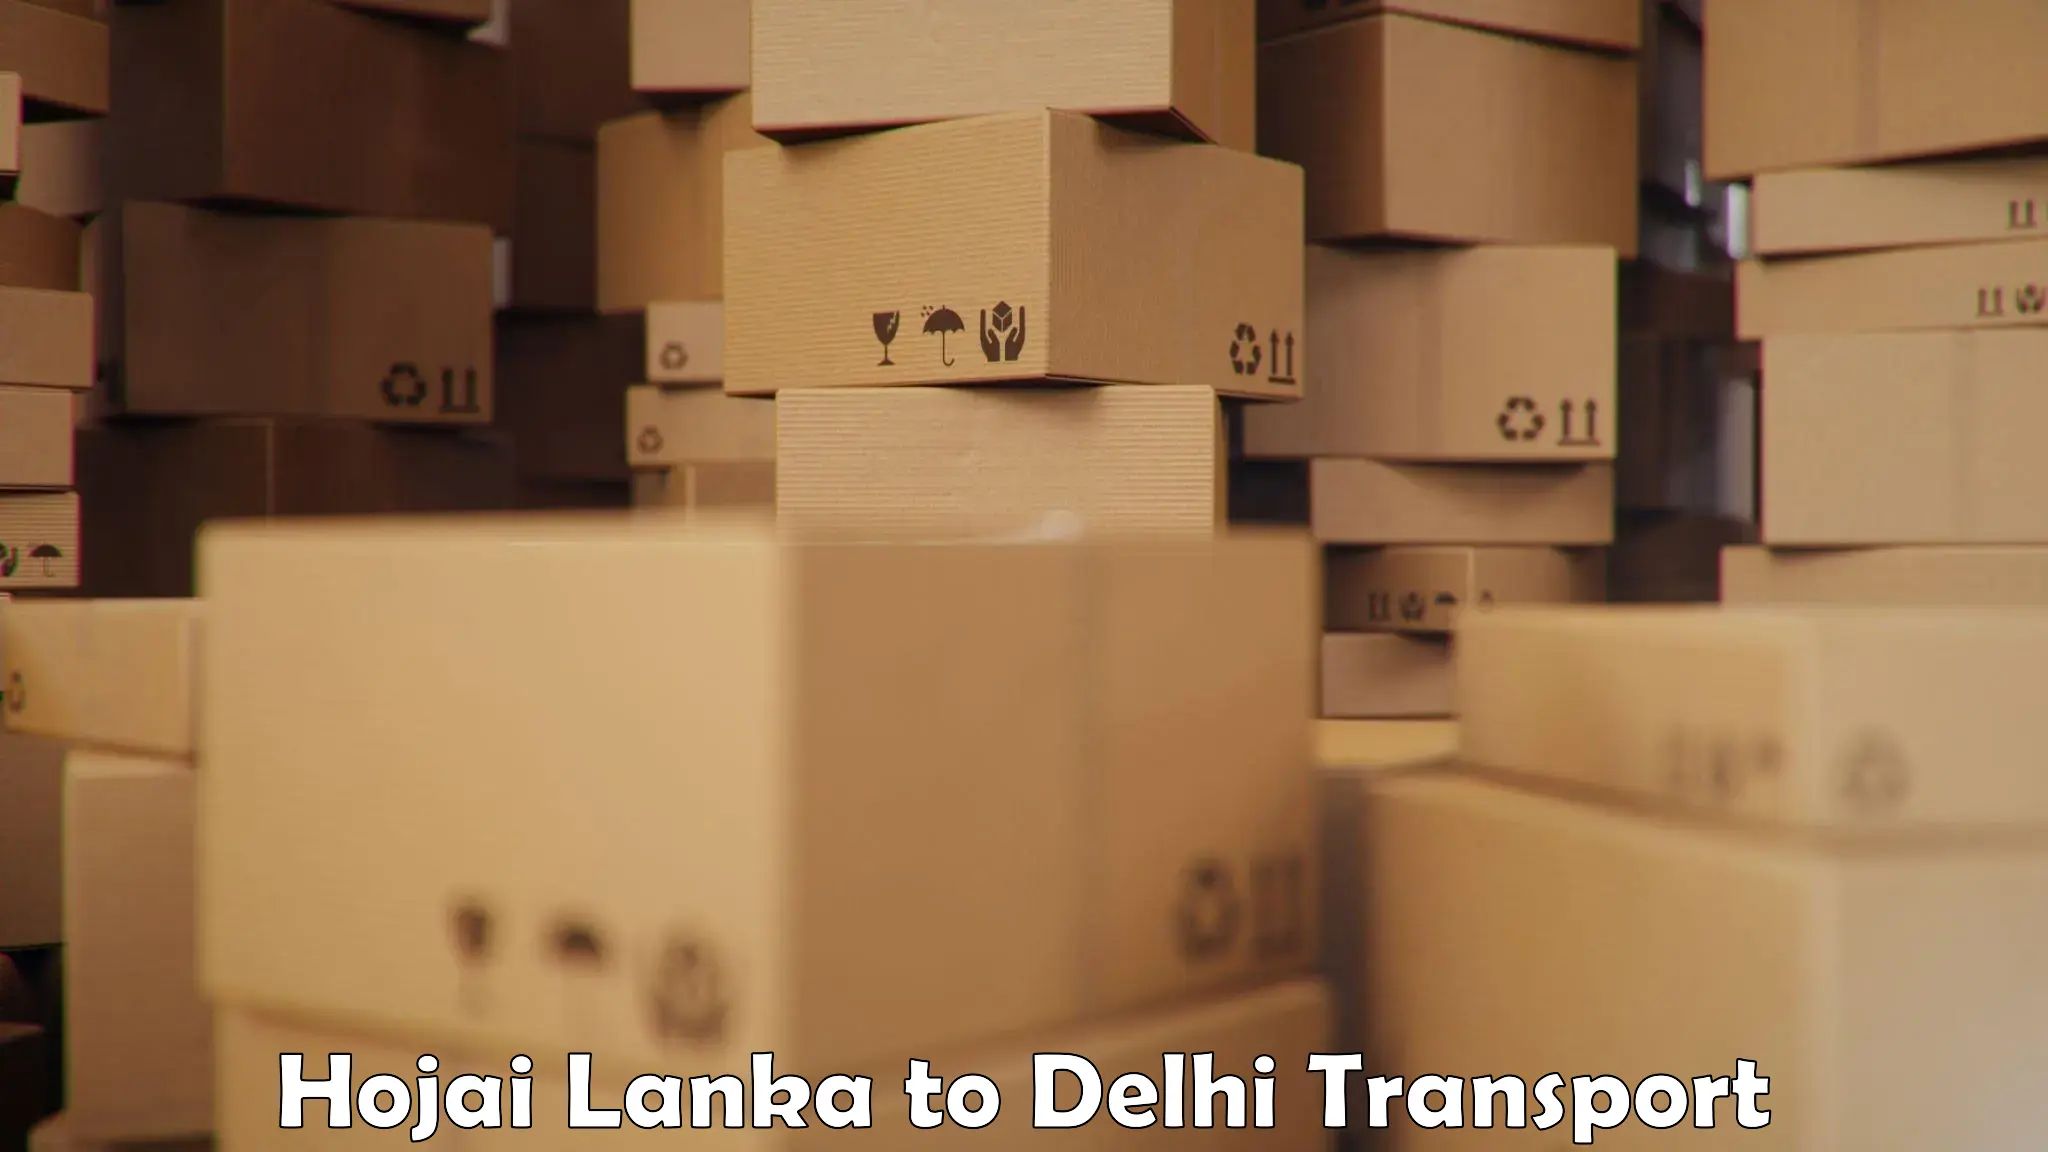 Interstate transport services Hojai Lanka to East Delhi